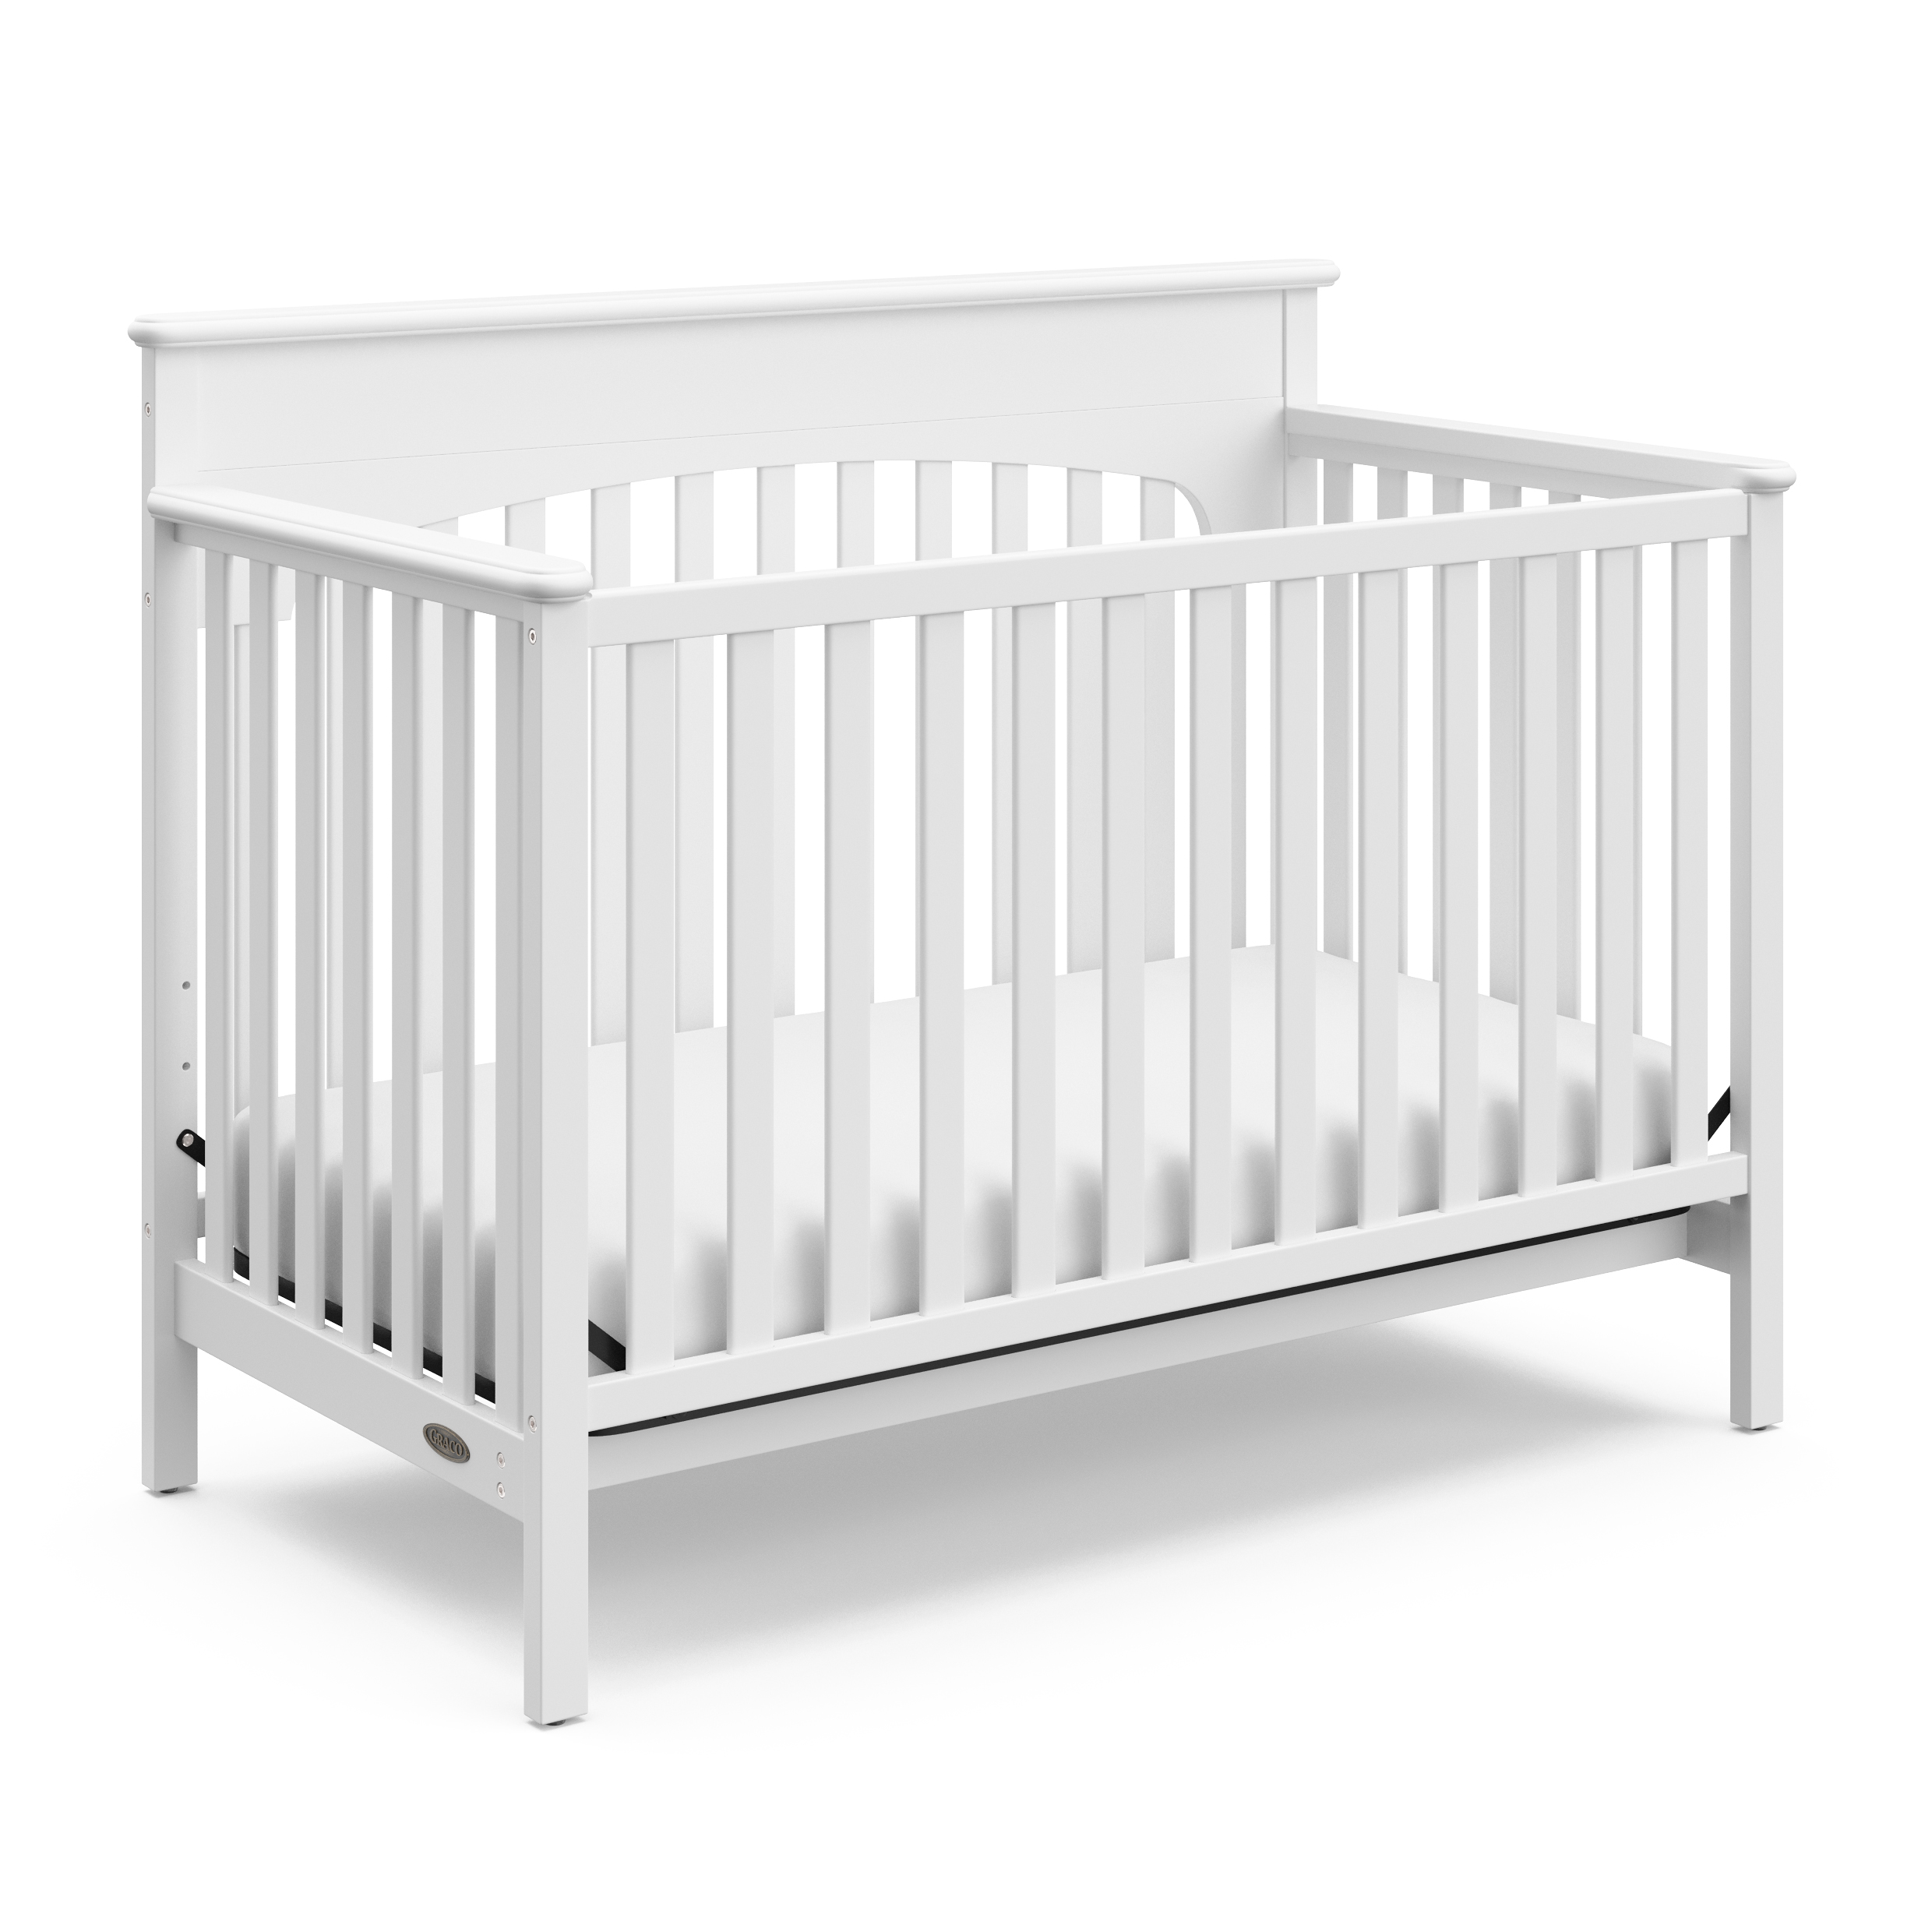 Graco Lauren 5-in-1 Convertible Baby Crib, White - image 1 of 10